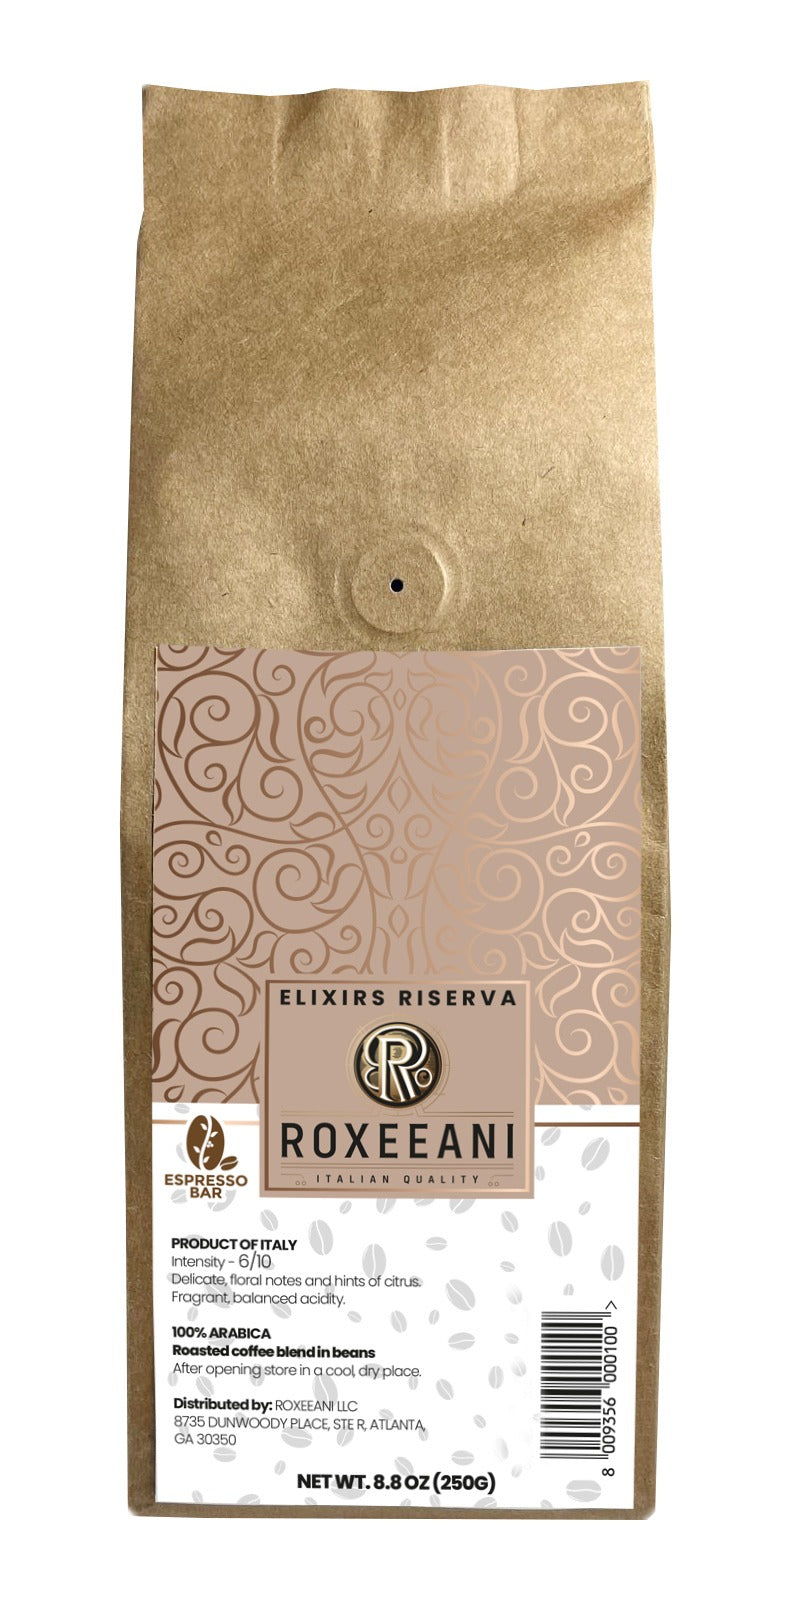 Italian Coffee in beans Elixirs Riserva